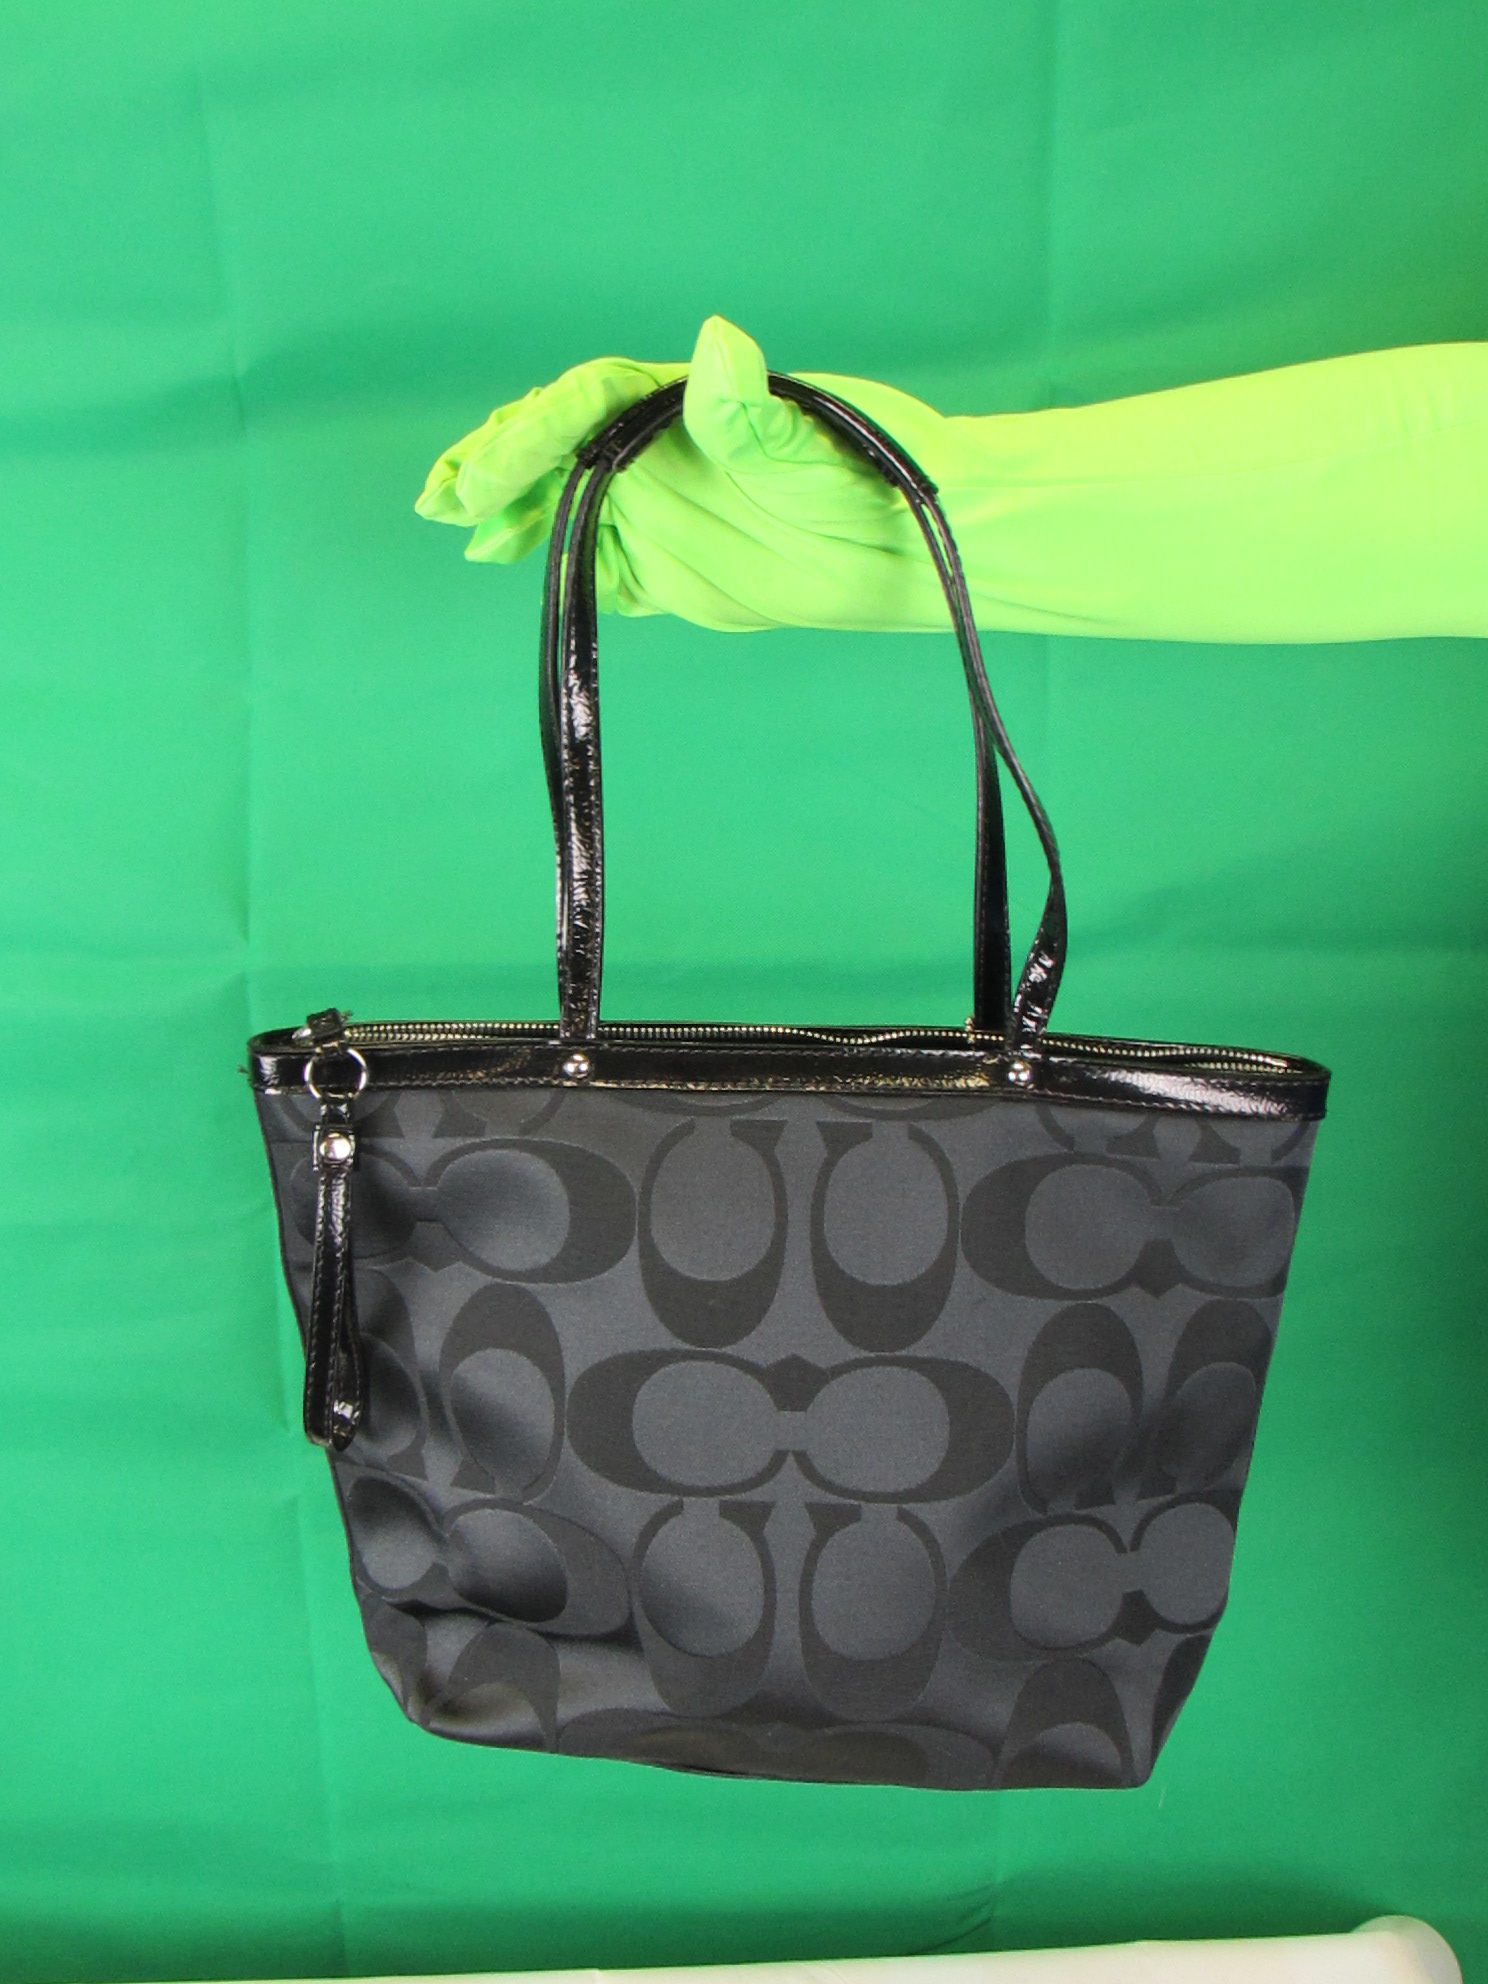 Buy COACH Women Black Shoulder Bag black Online @ Best Price in India |  Flipkart.com